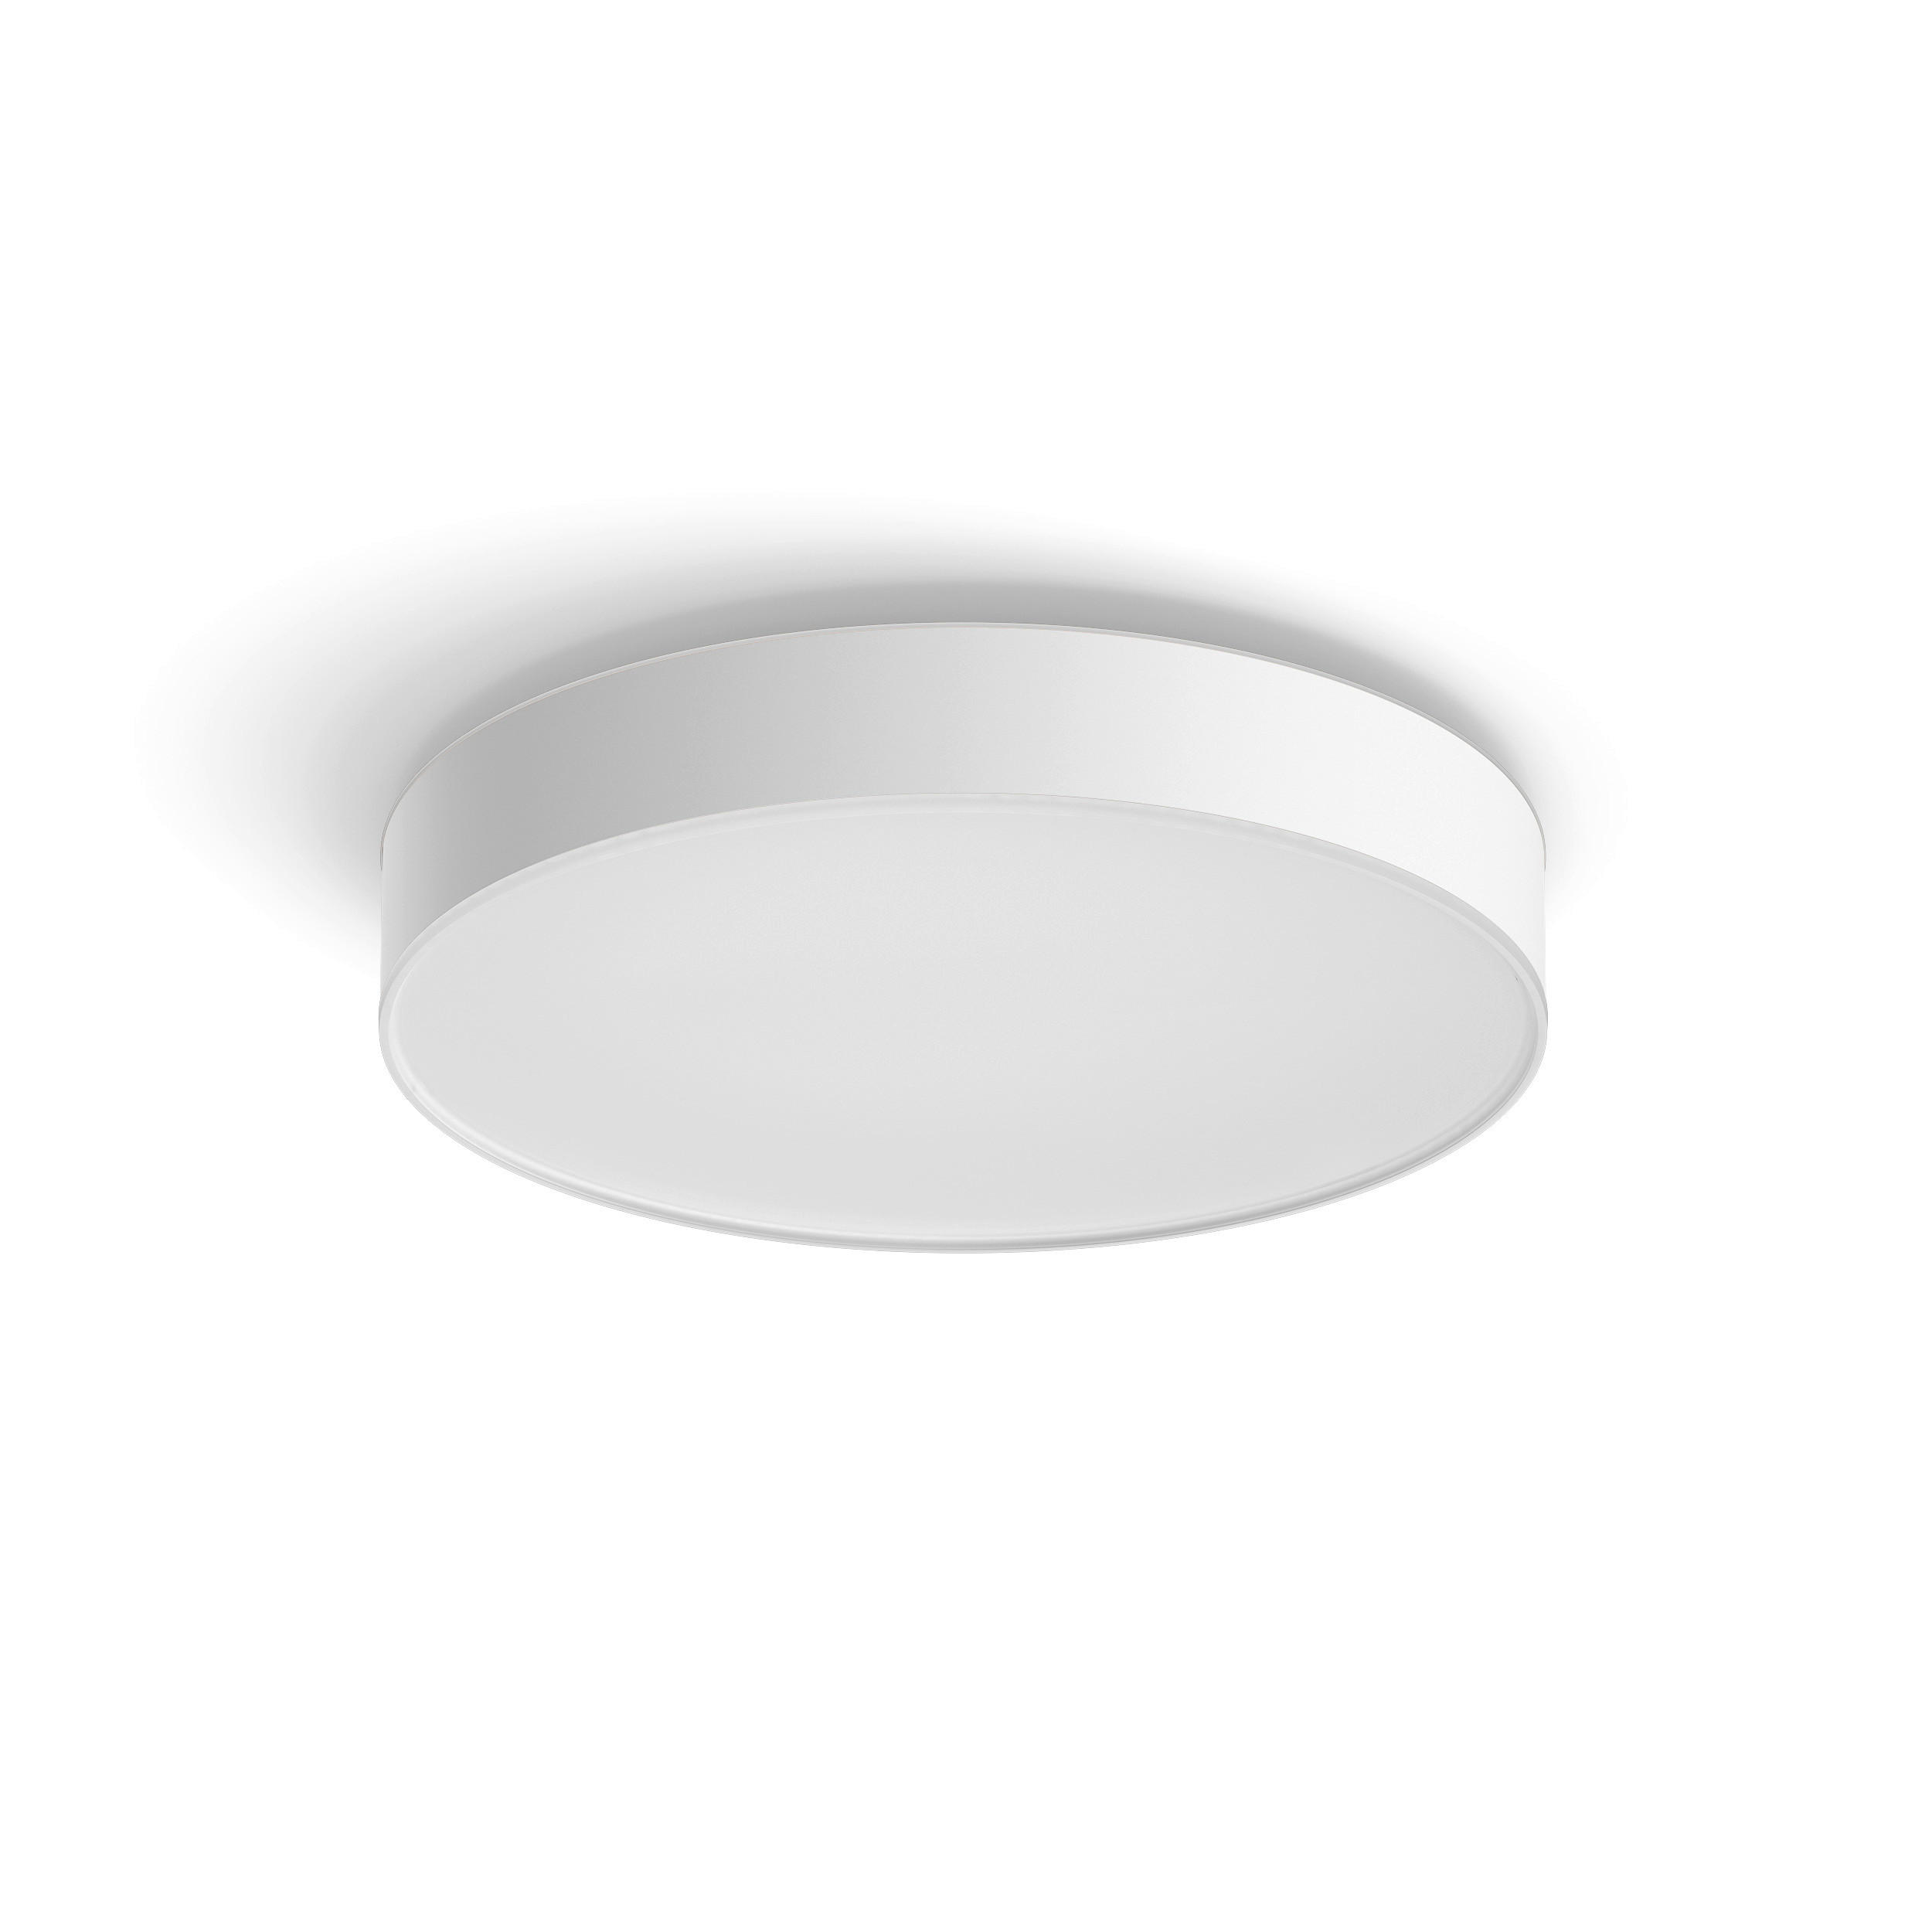 LED-DECKENLEUCHTE 42,5/8,4 cm    - Weiß, Design, Kunststoff (42,5/8,4cm) - Philips HUE